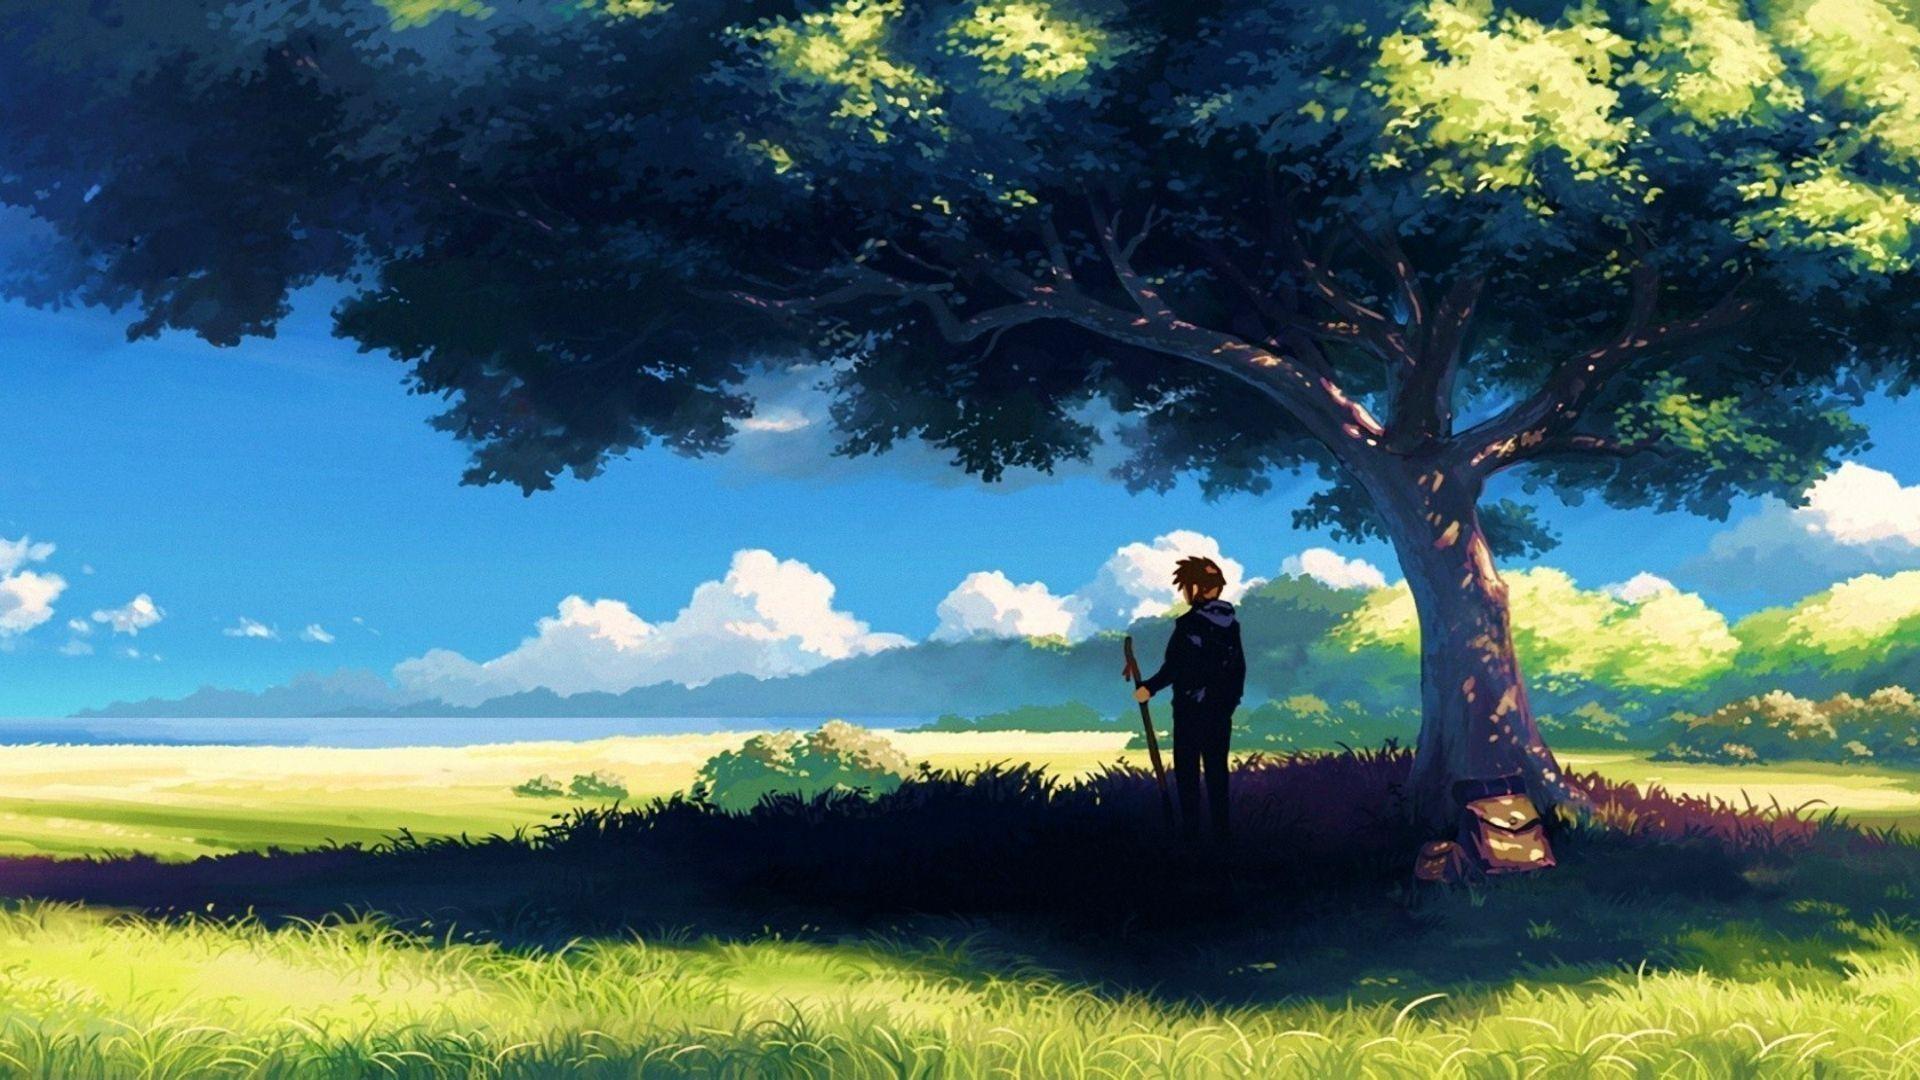 dreamy anime landscape wallpaper